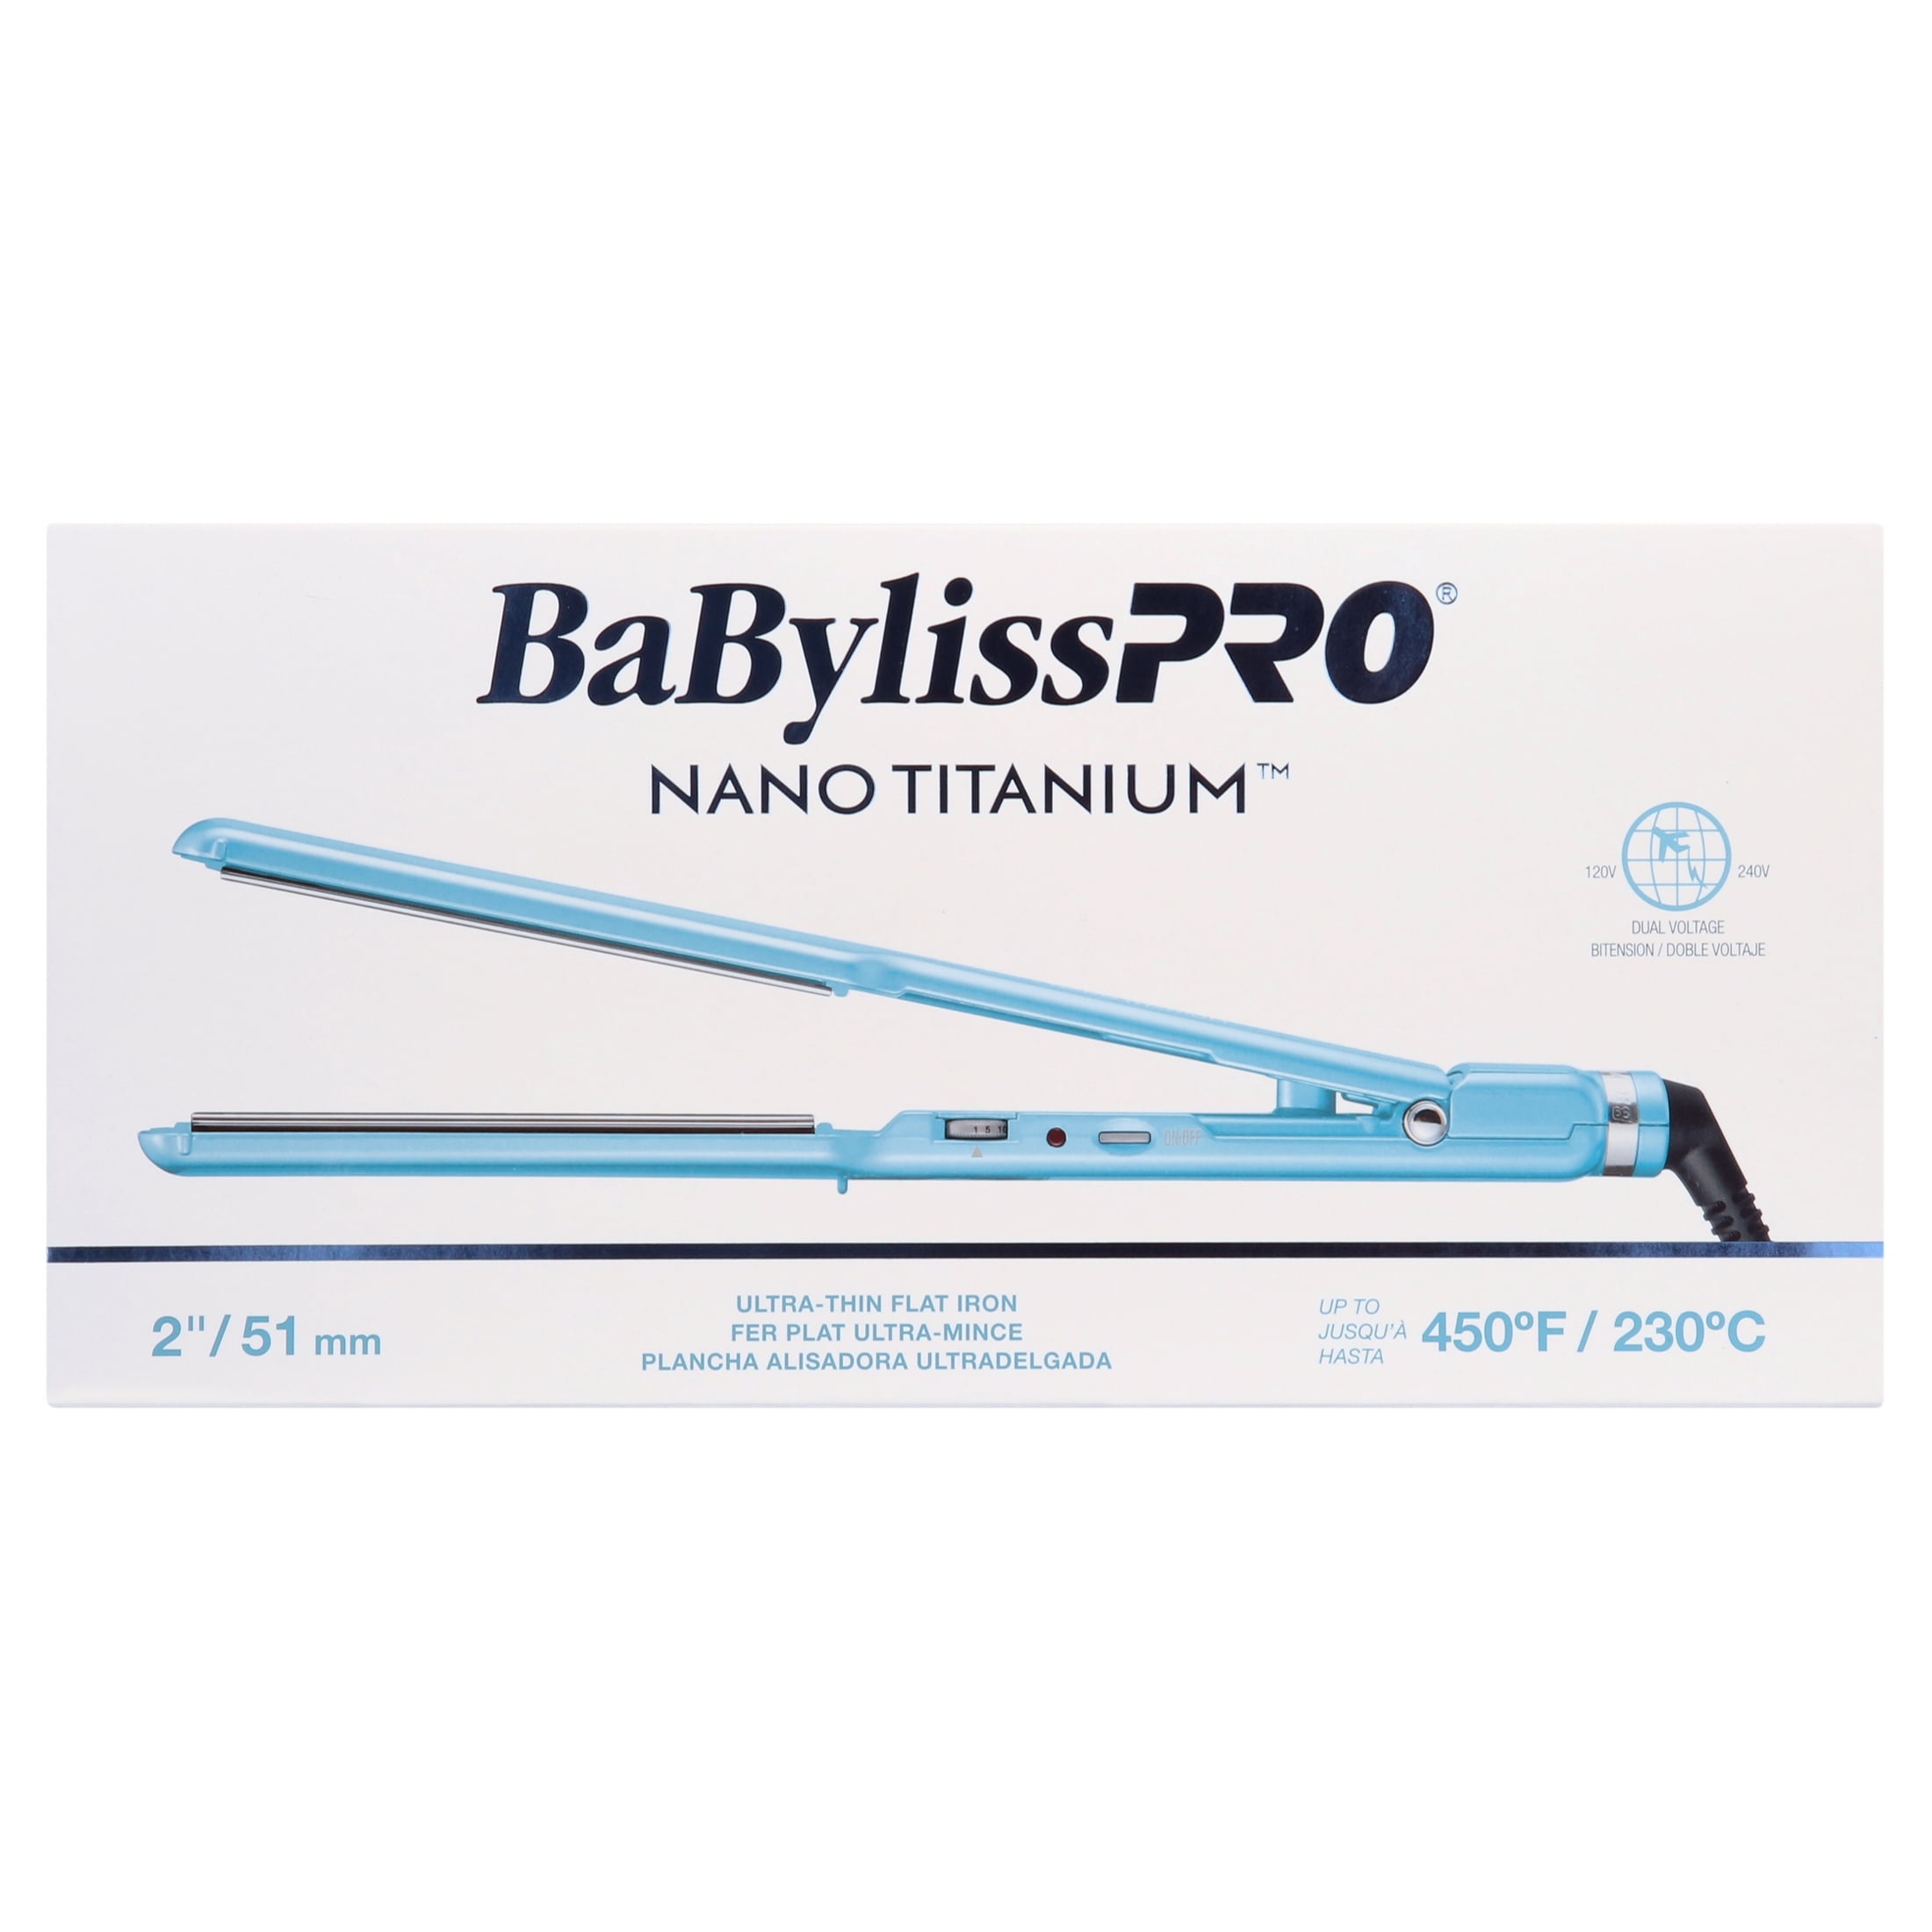 Conair BaBylissPRO 2 in. Nano Titanium Ultra-Thin Hair Straightener  BNT4074TUC - The Home Depot